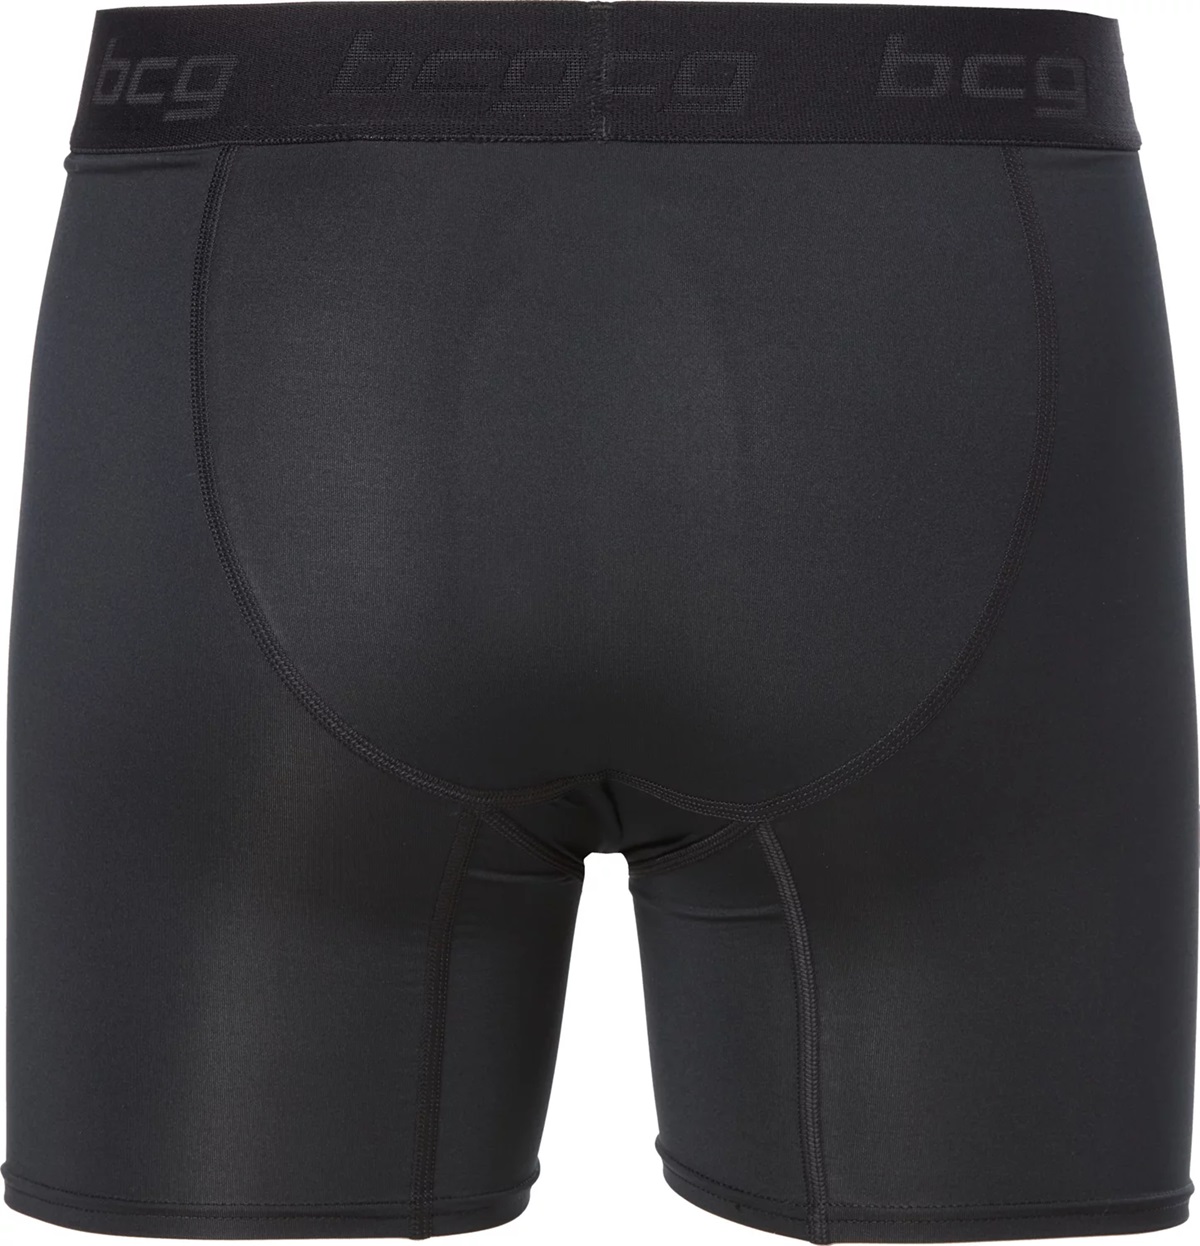 14 Superior Men’s BCG Compression Shorts For 2023